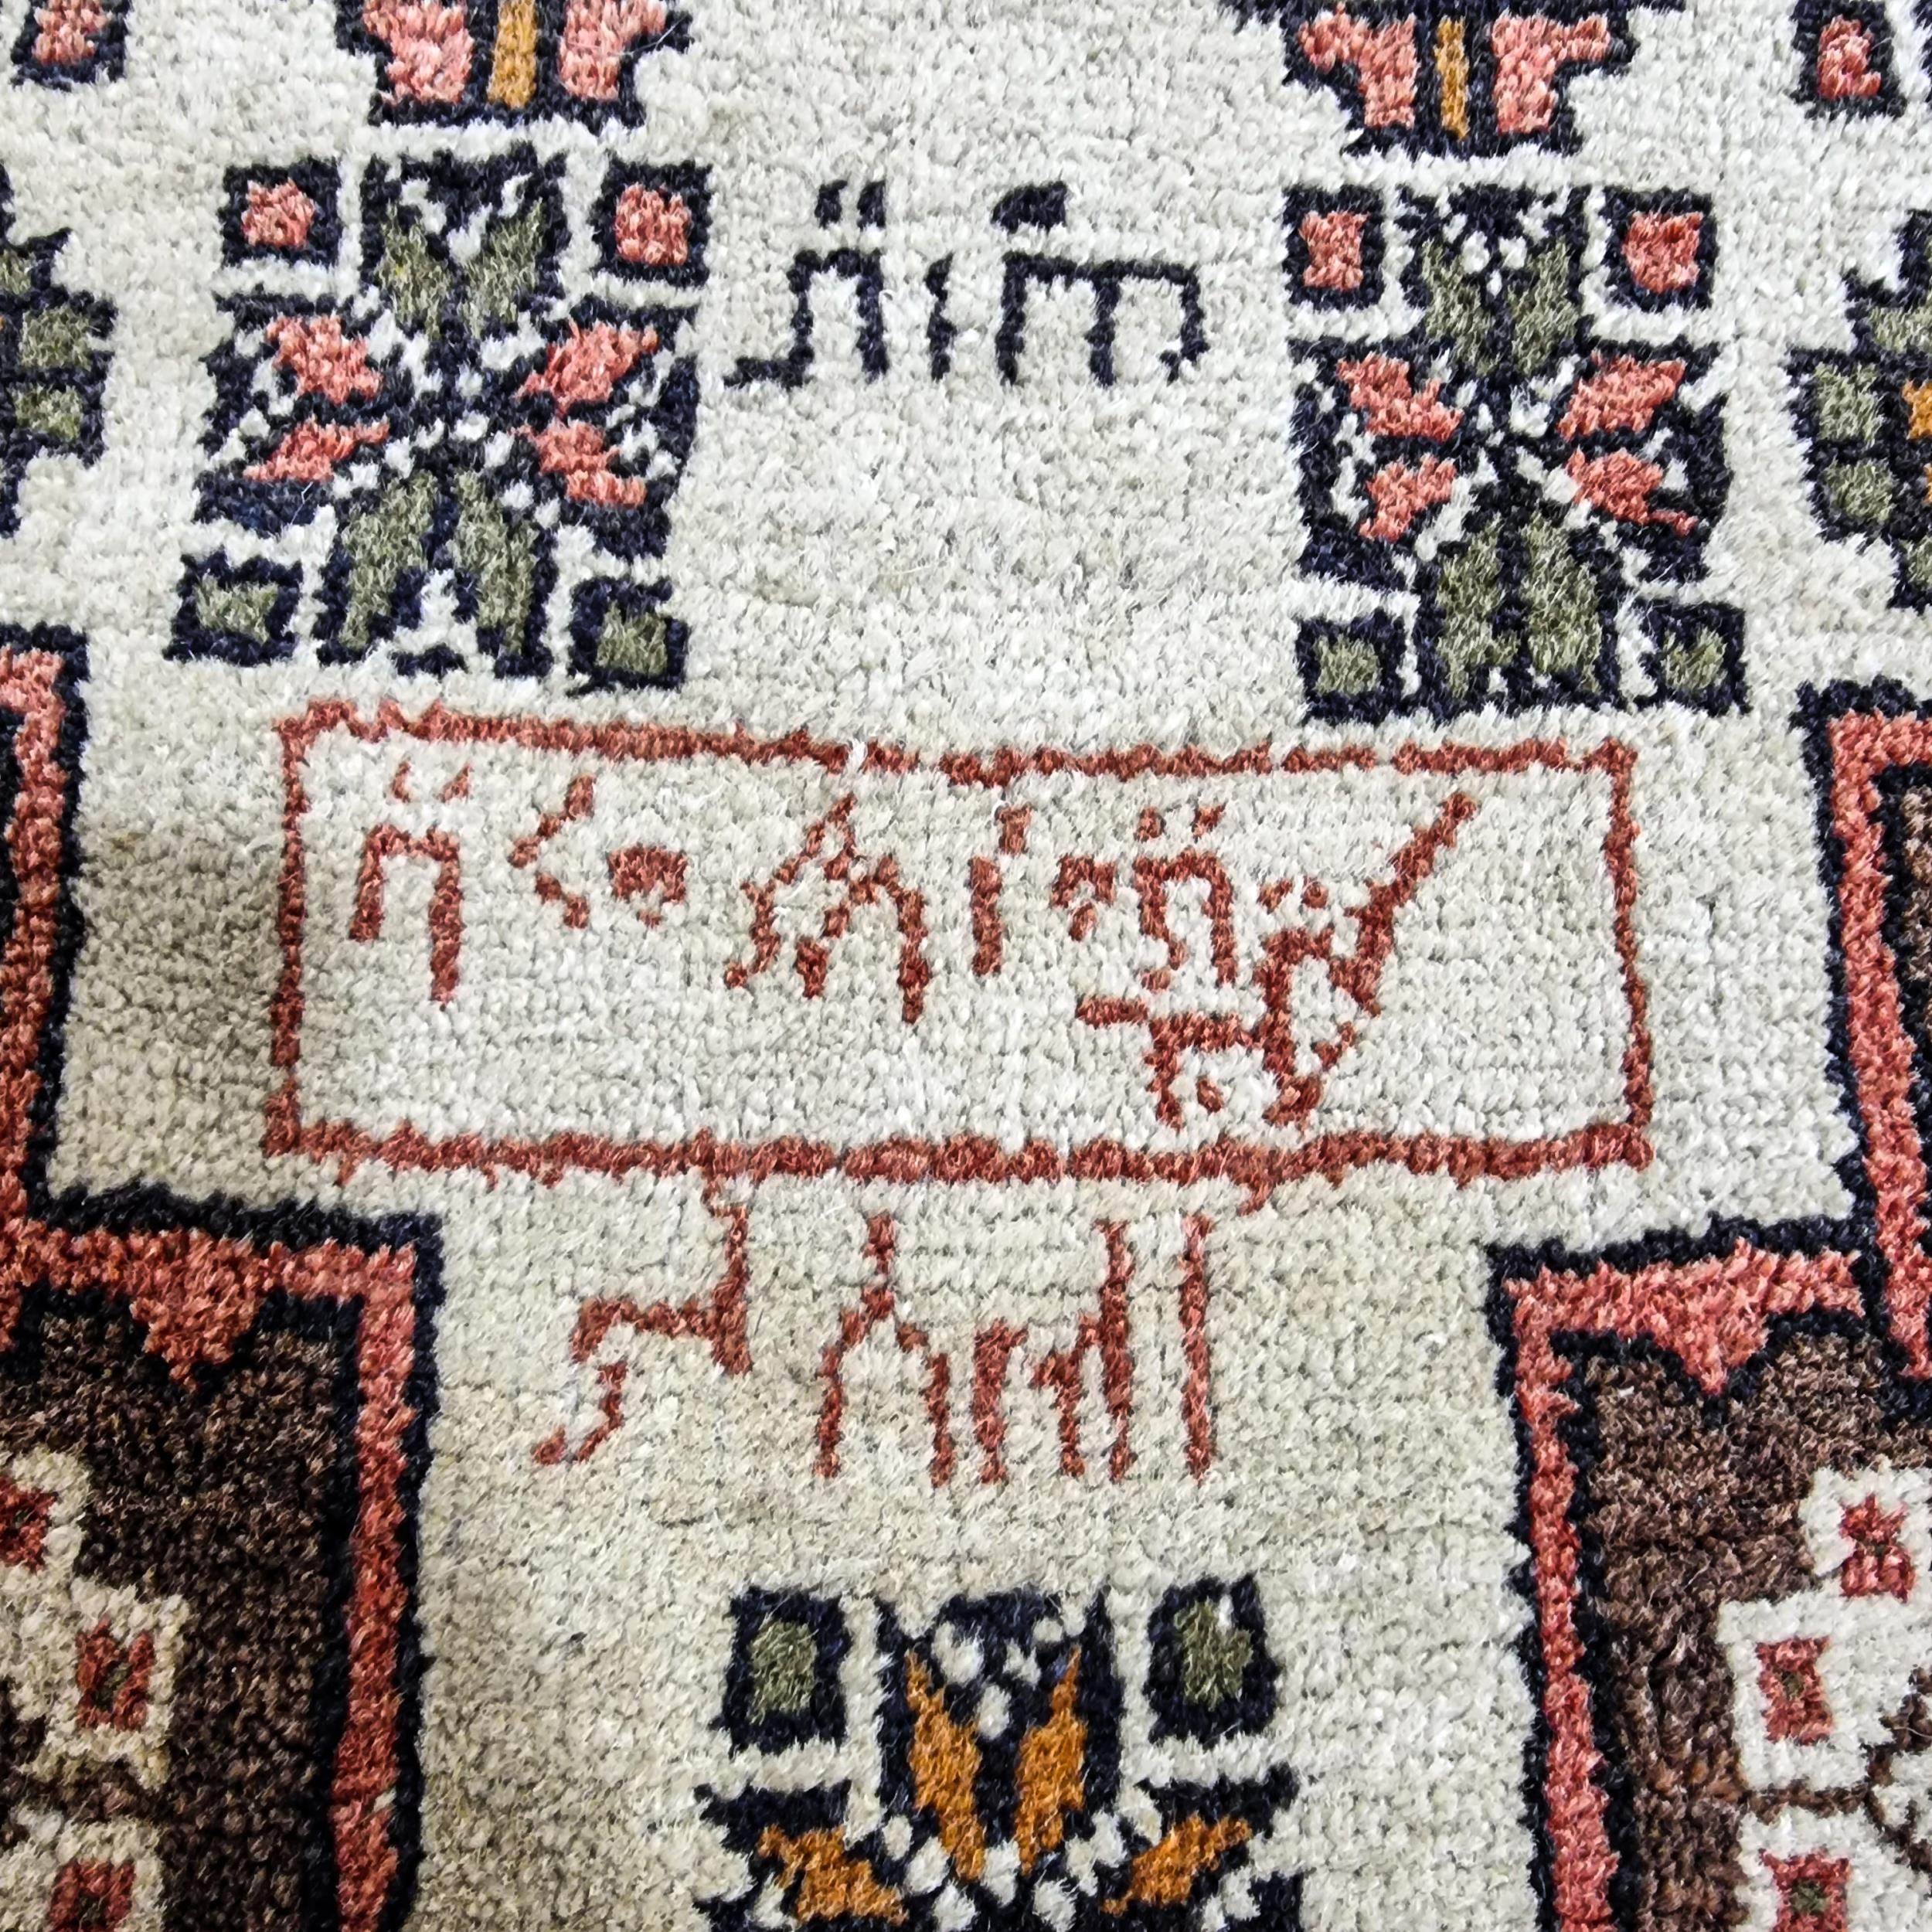 An Antique handmade Afghan wool rug, geometric floral design with Arabic script, 205cm x 121cm - Image 2 of 4